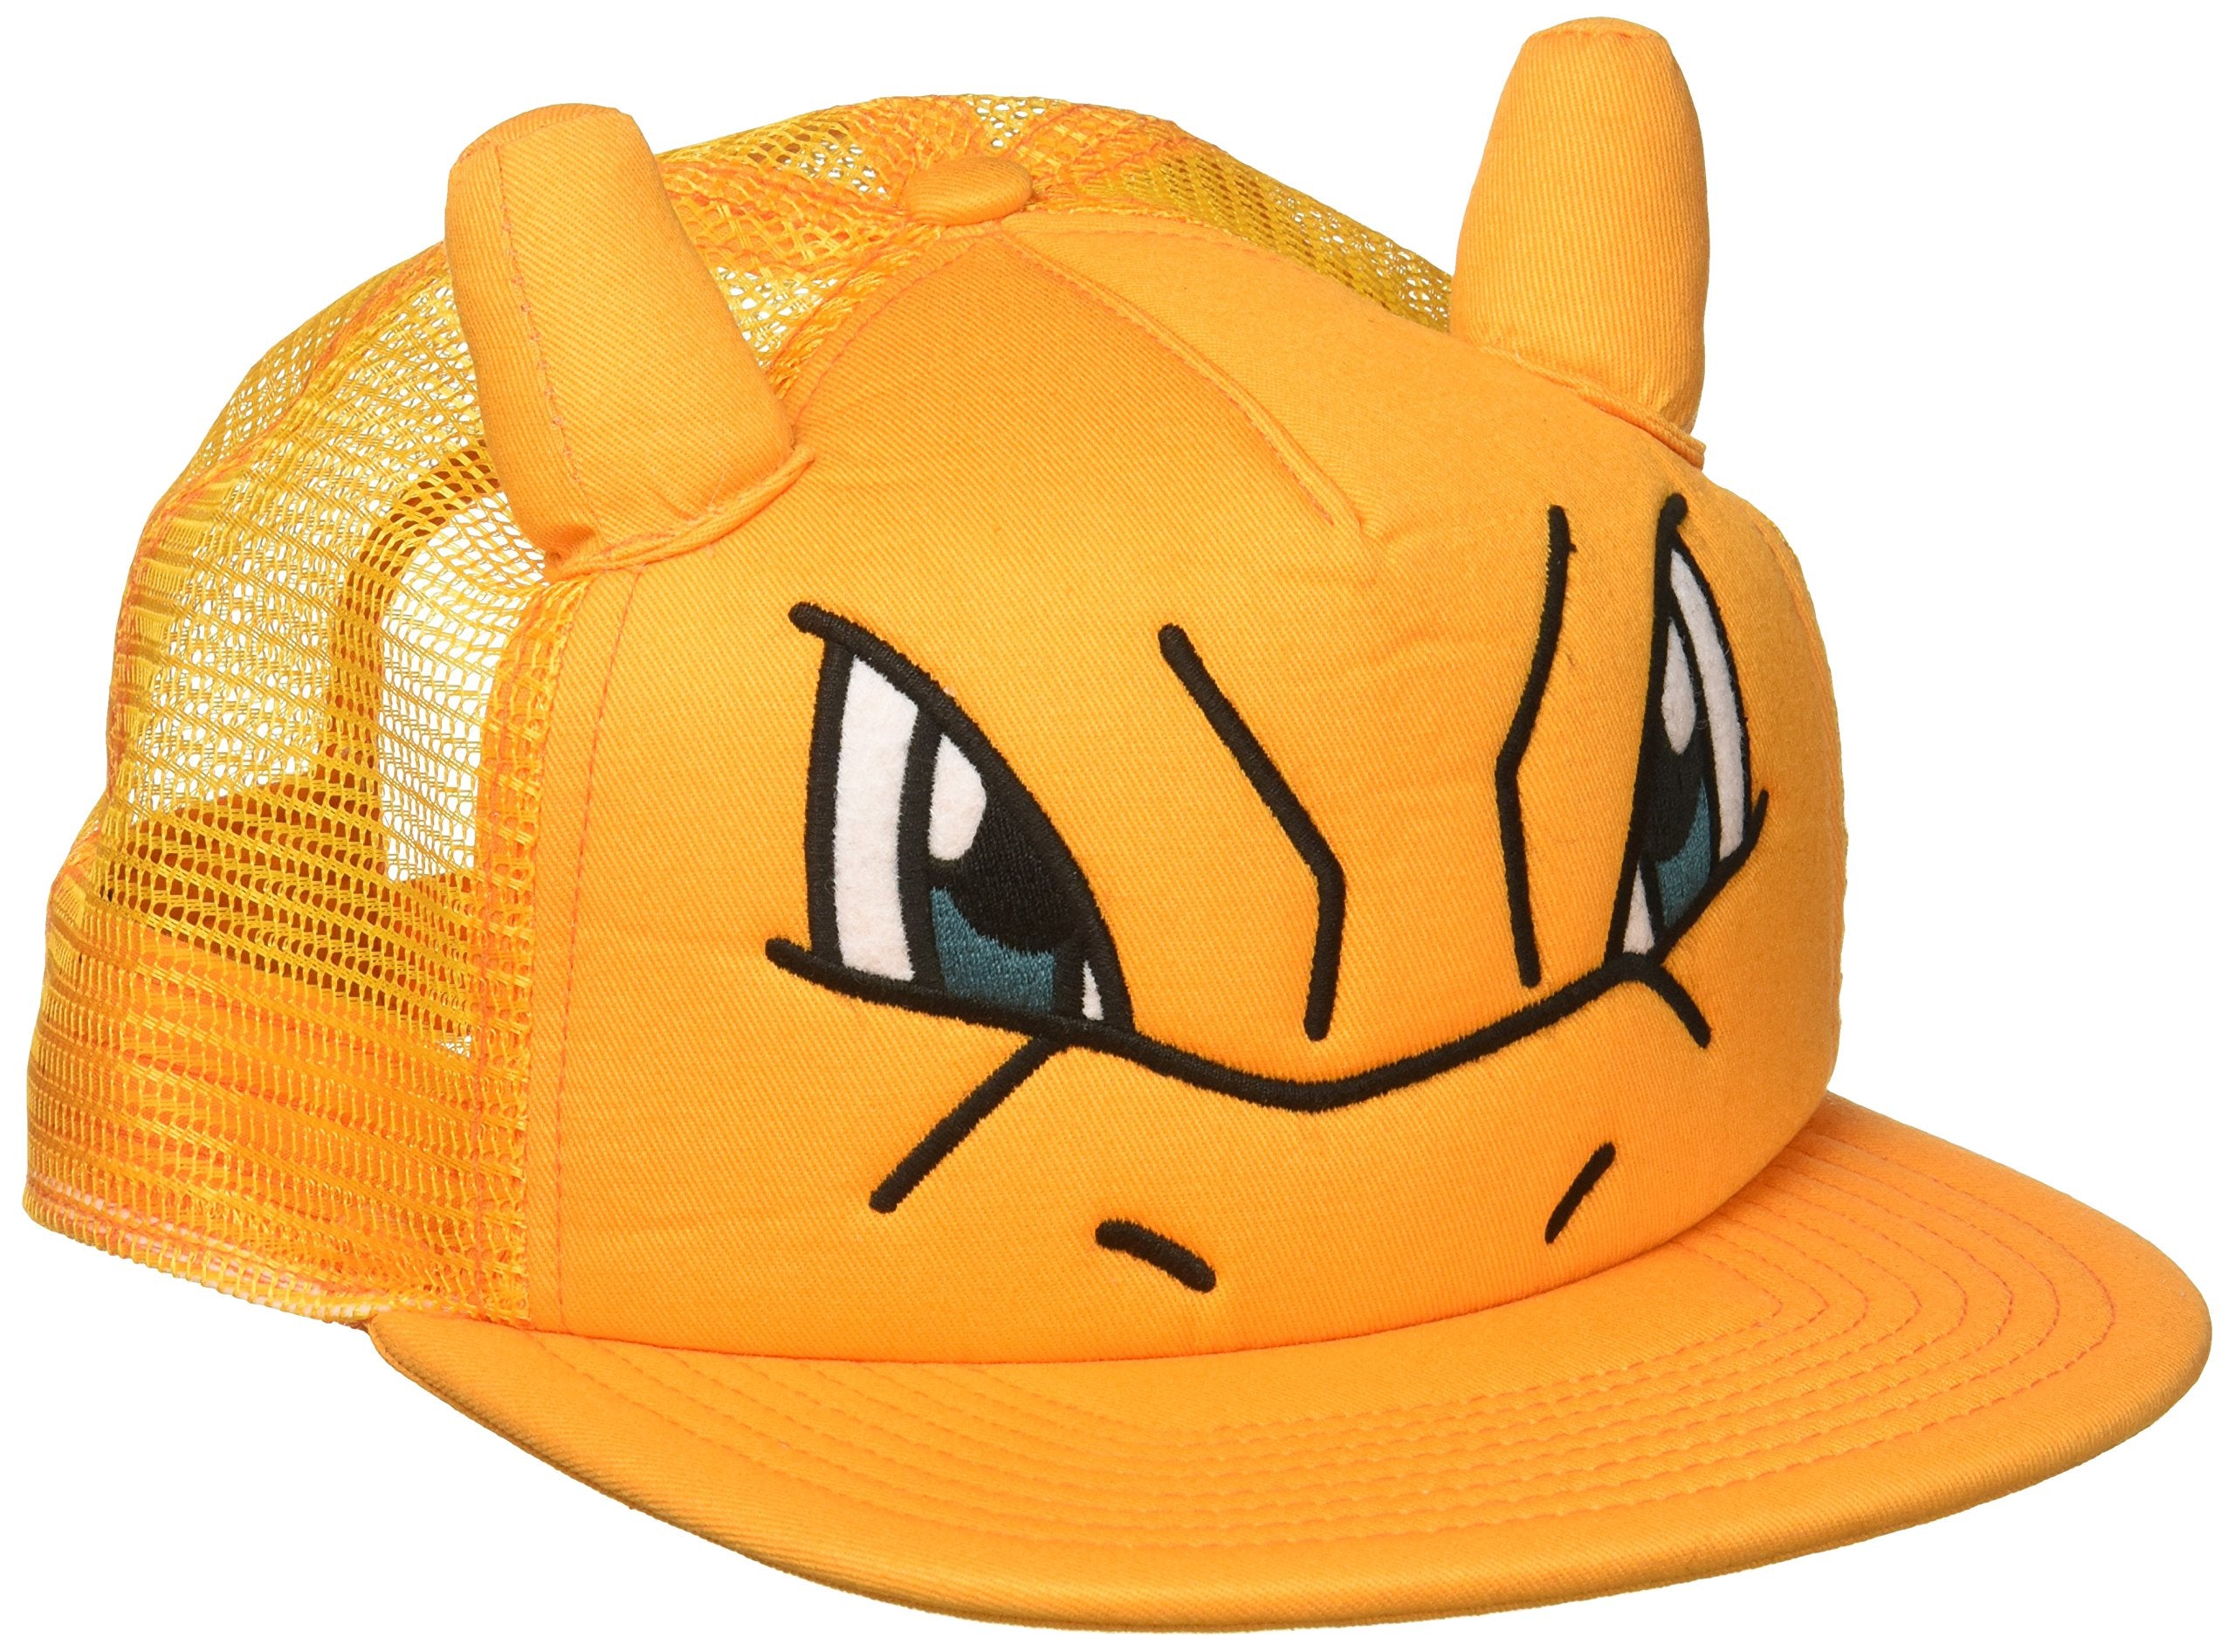 Bioworld Pokemon Charizard Big Face Trucker Snapback Hat with Ears